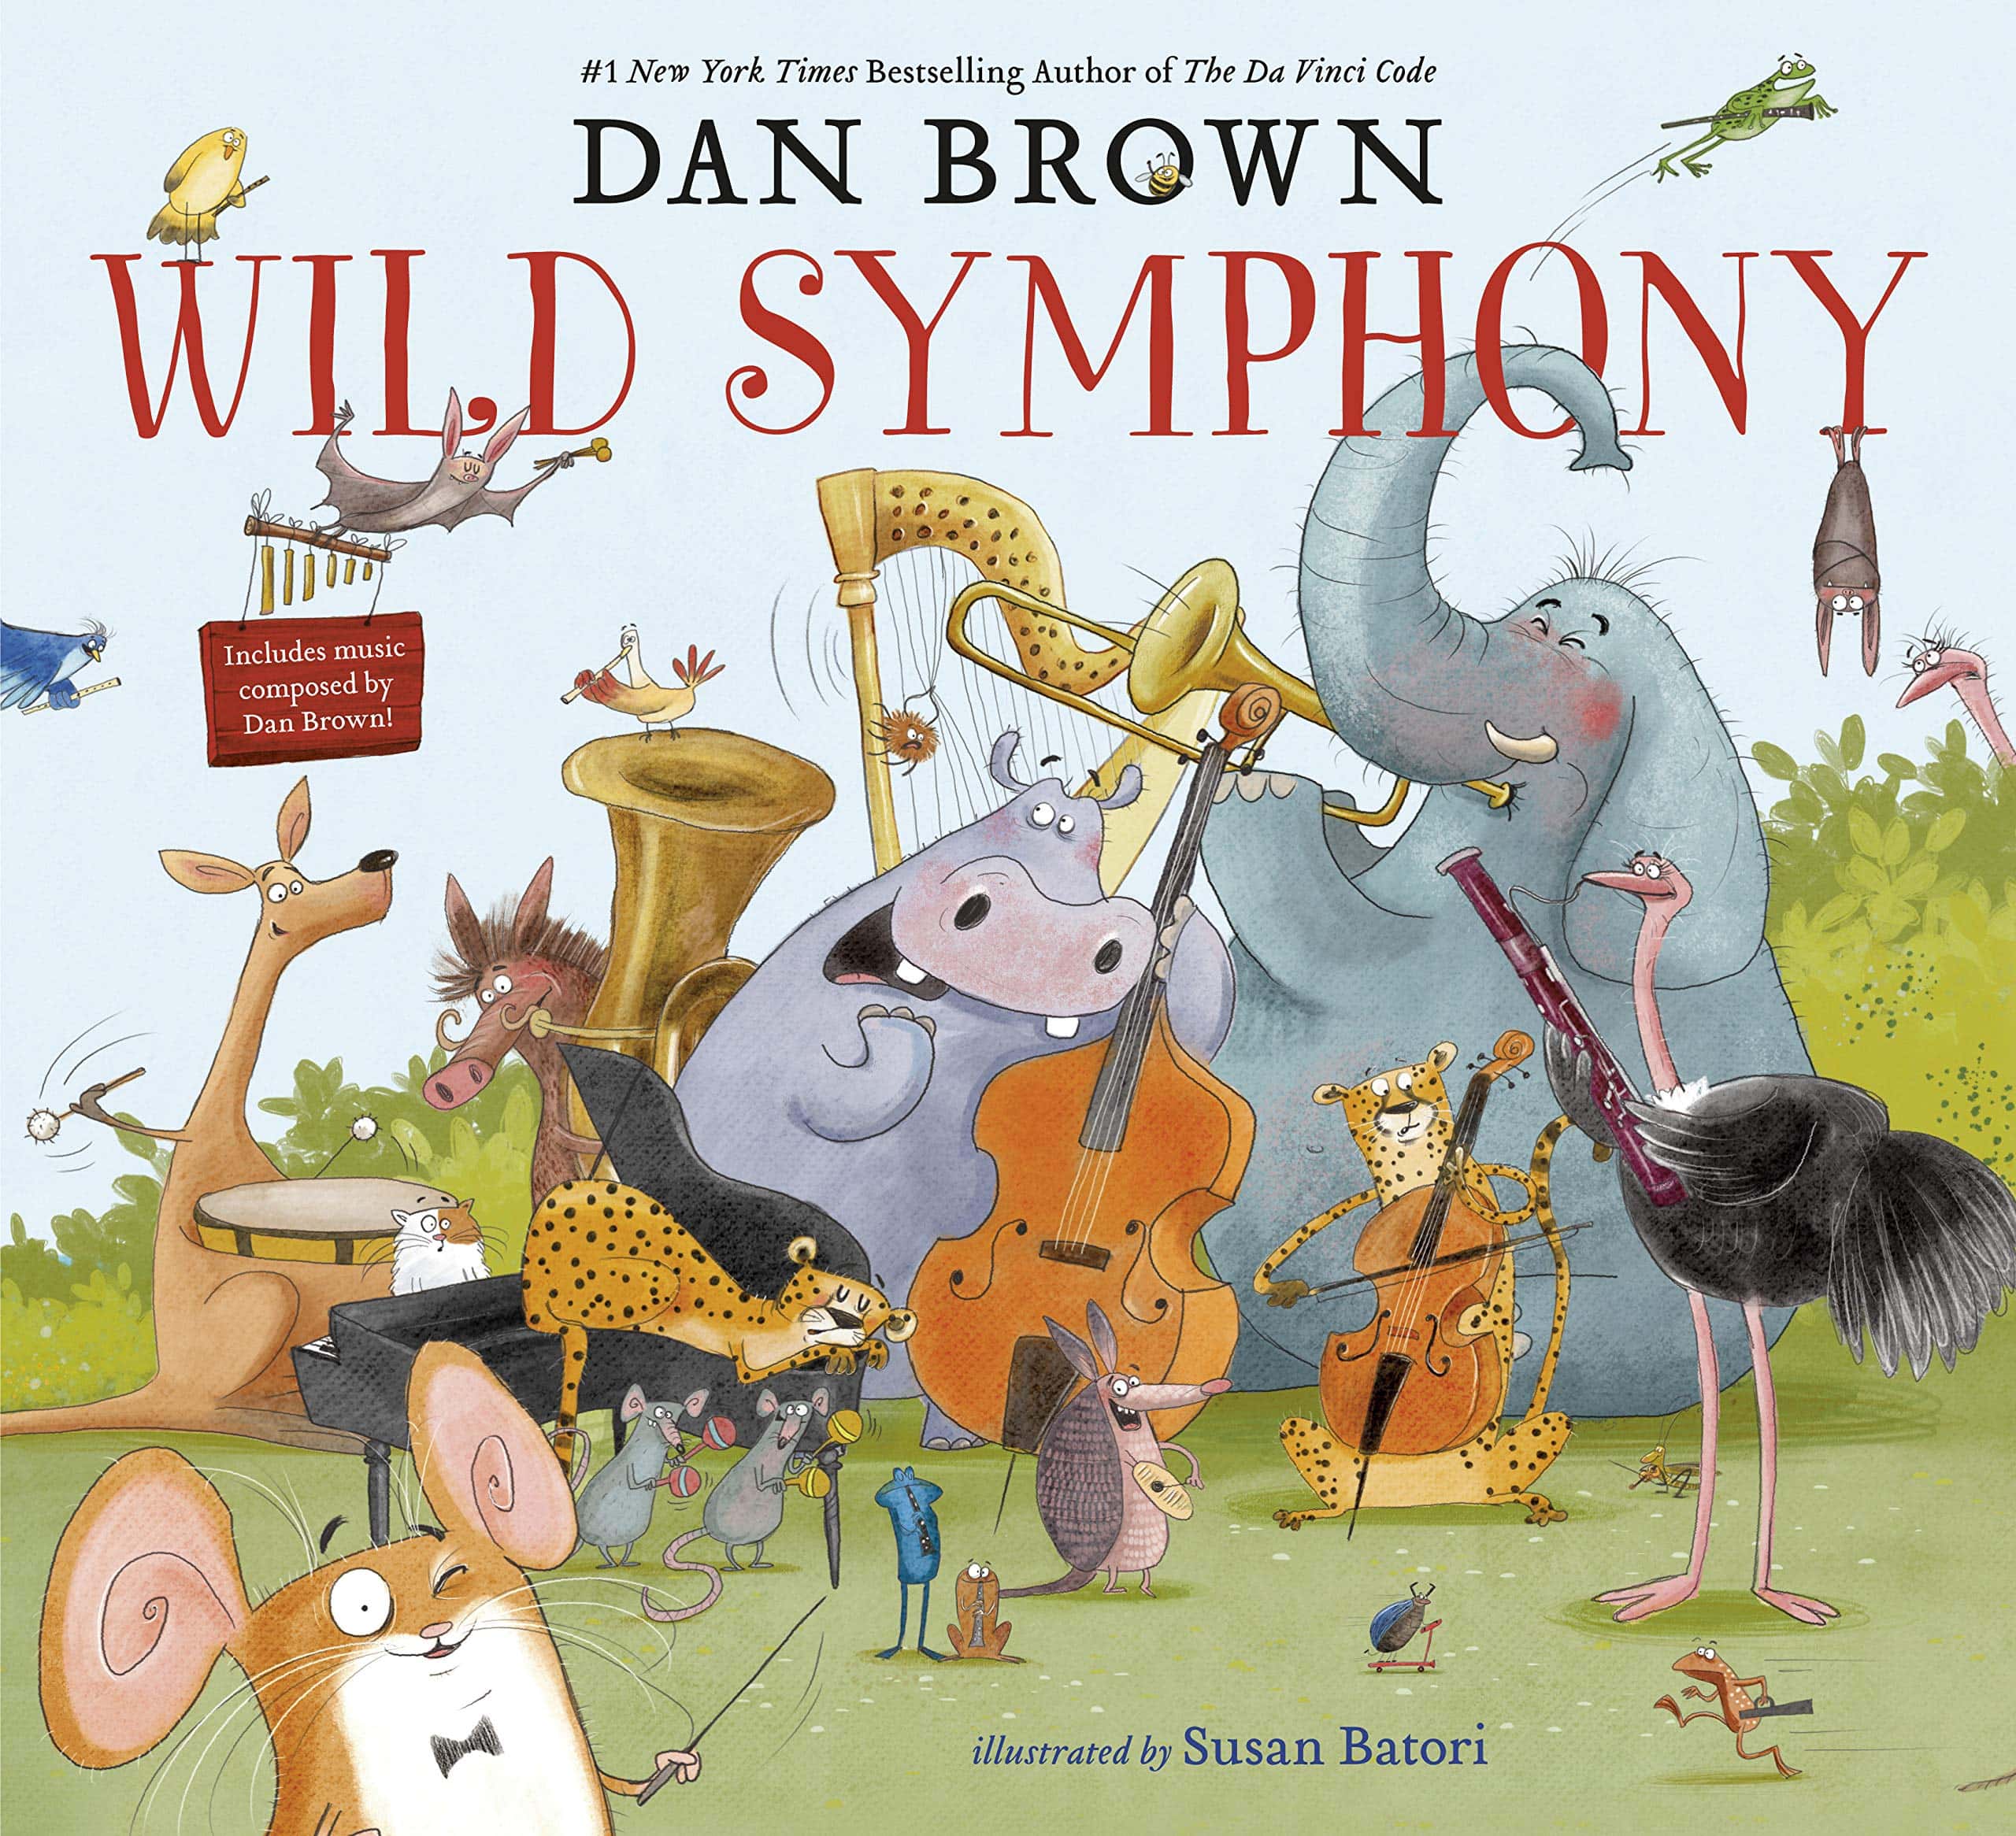 "Wild Symphony" Book Cover